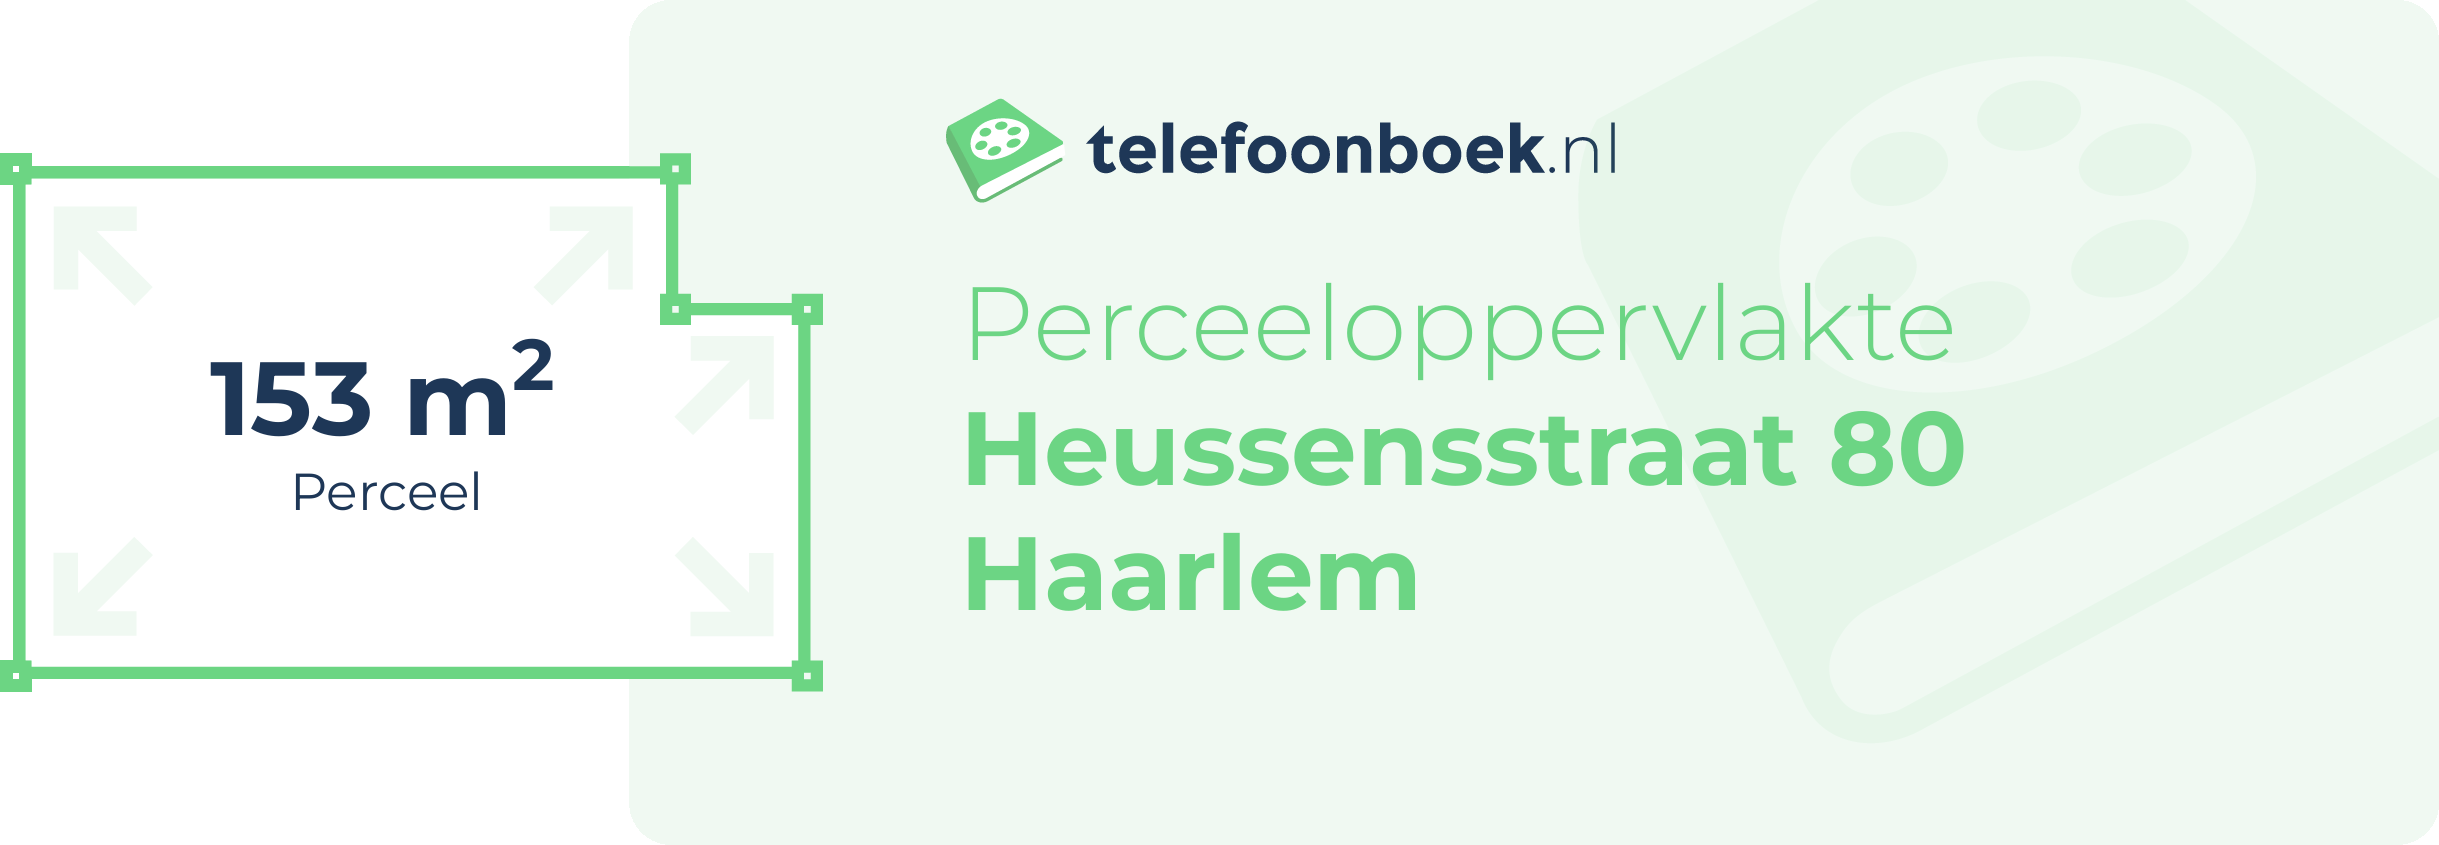 Perceeloppervlakte Heussensstraat 80 Haarlem